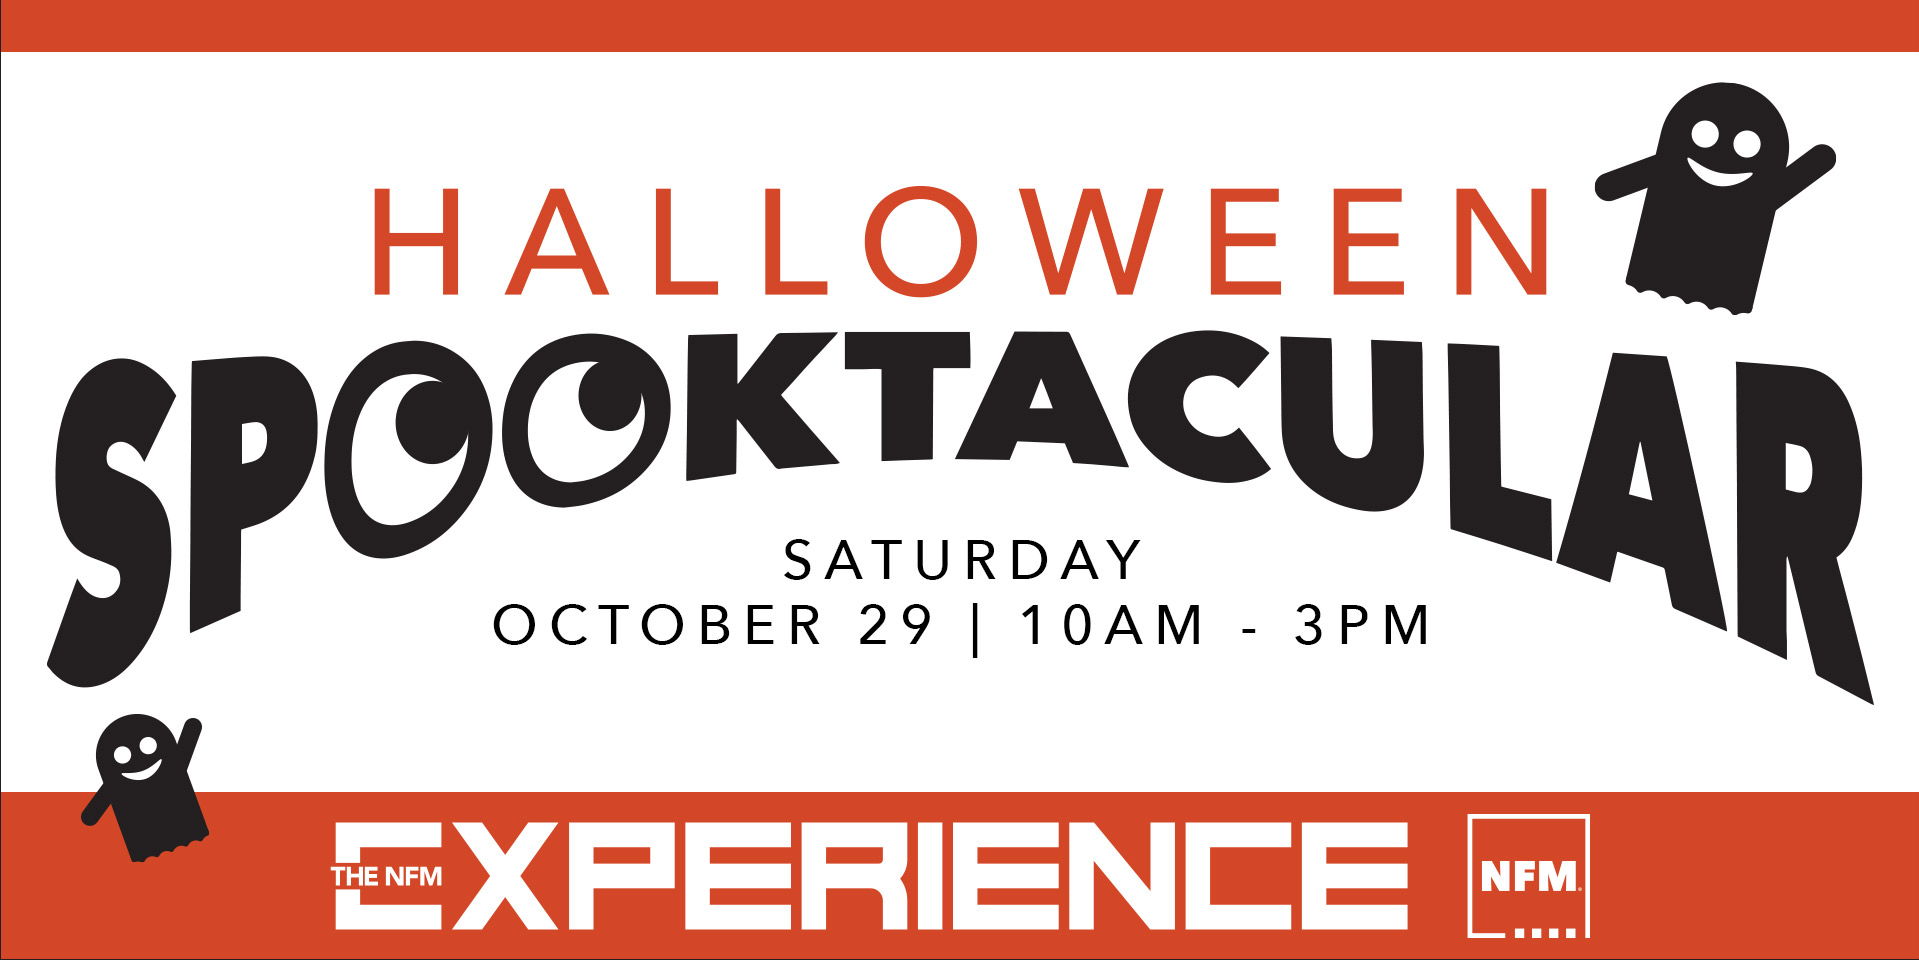 Halloween Spooktacular - Omaha promotional image